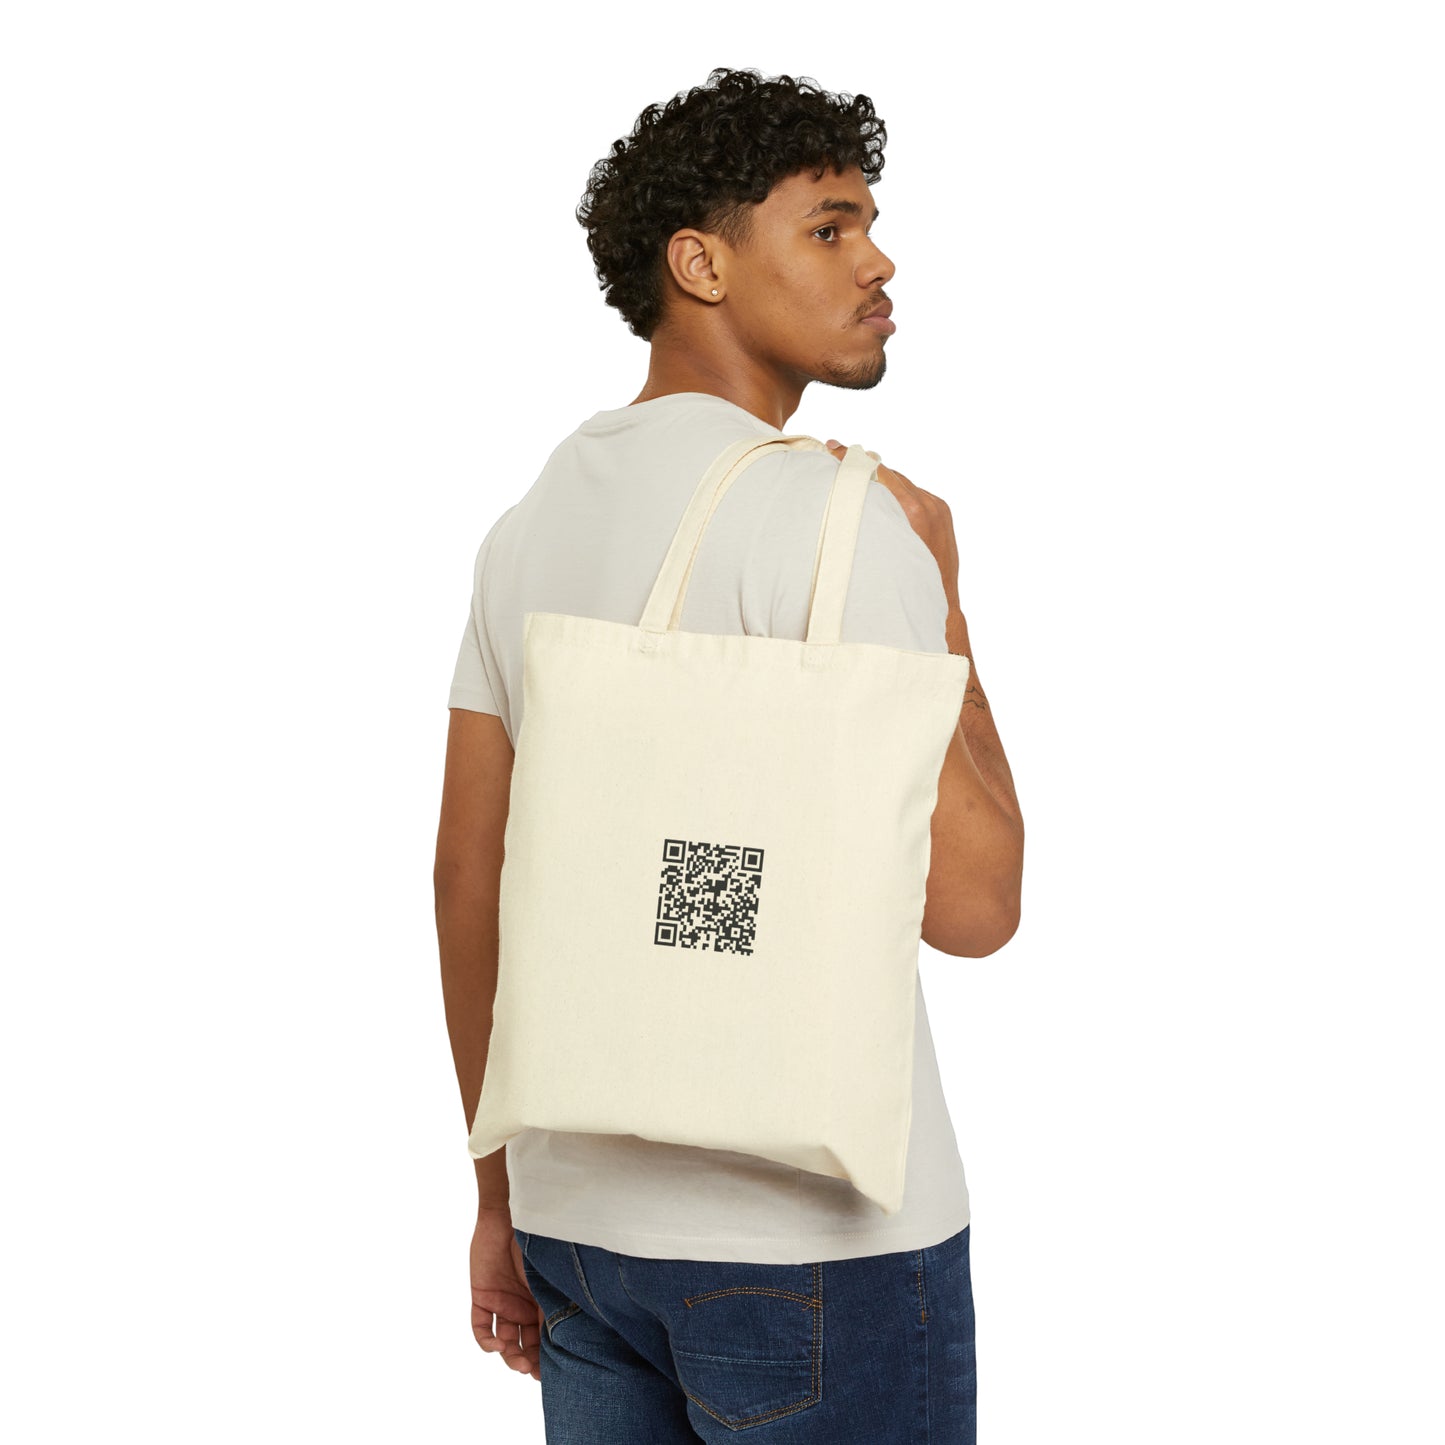 Moneyland - Cotton Canvas Tote Bag